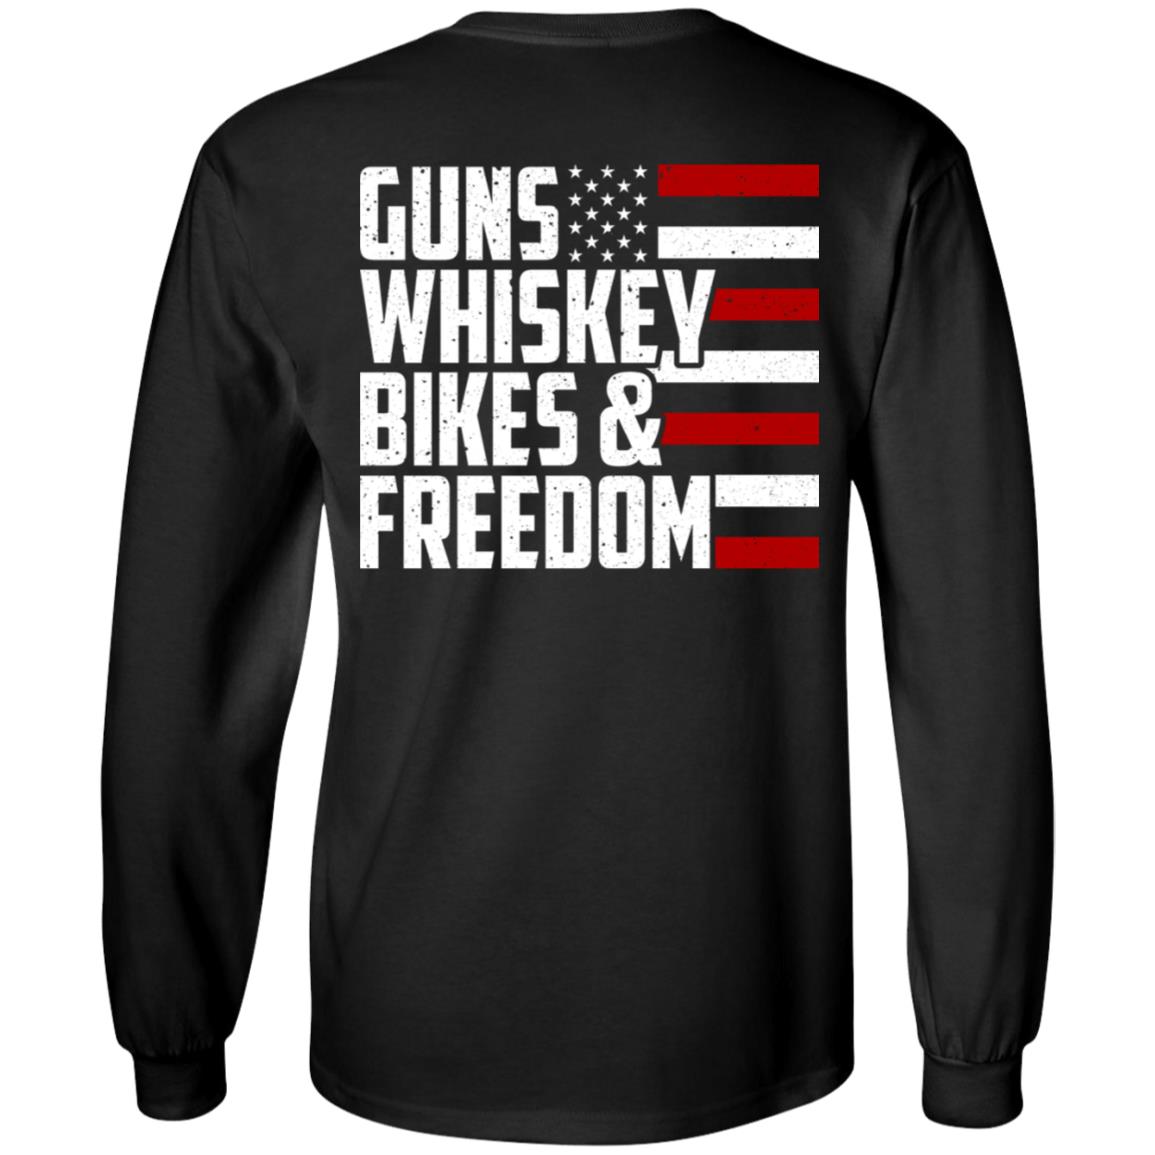 Guns, Whiskey, Bikes & Freedom Apparel